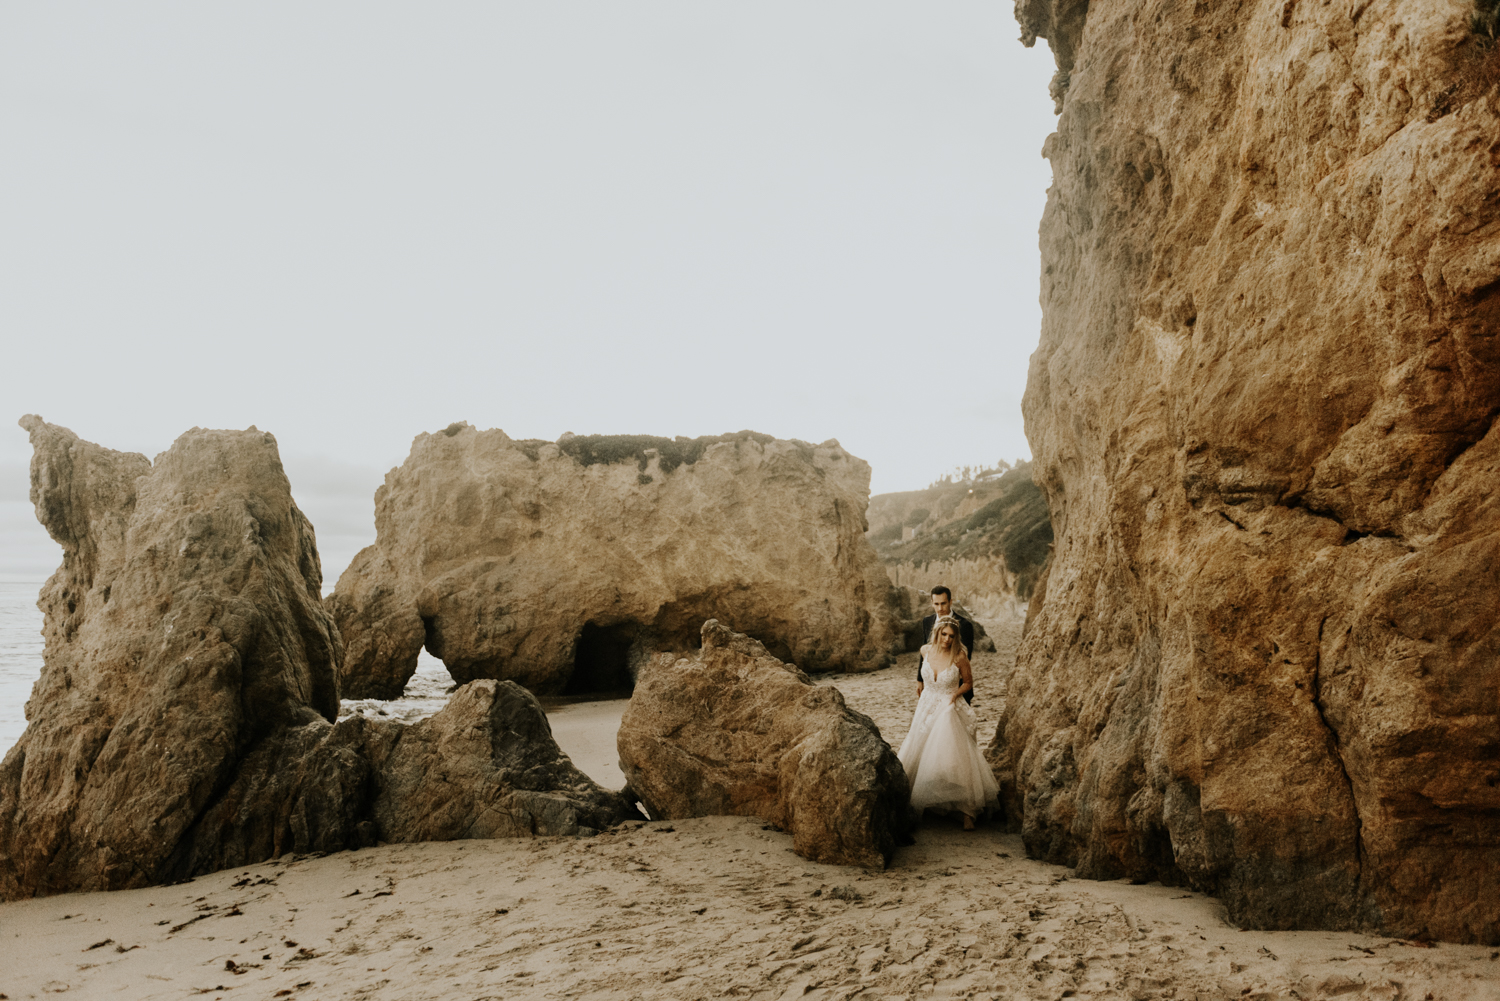 Surprise Intimate Destination Wedding at El Matador Beach in Malibu, California